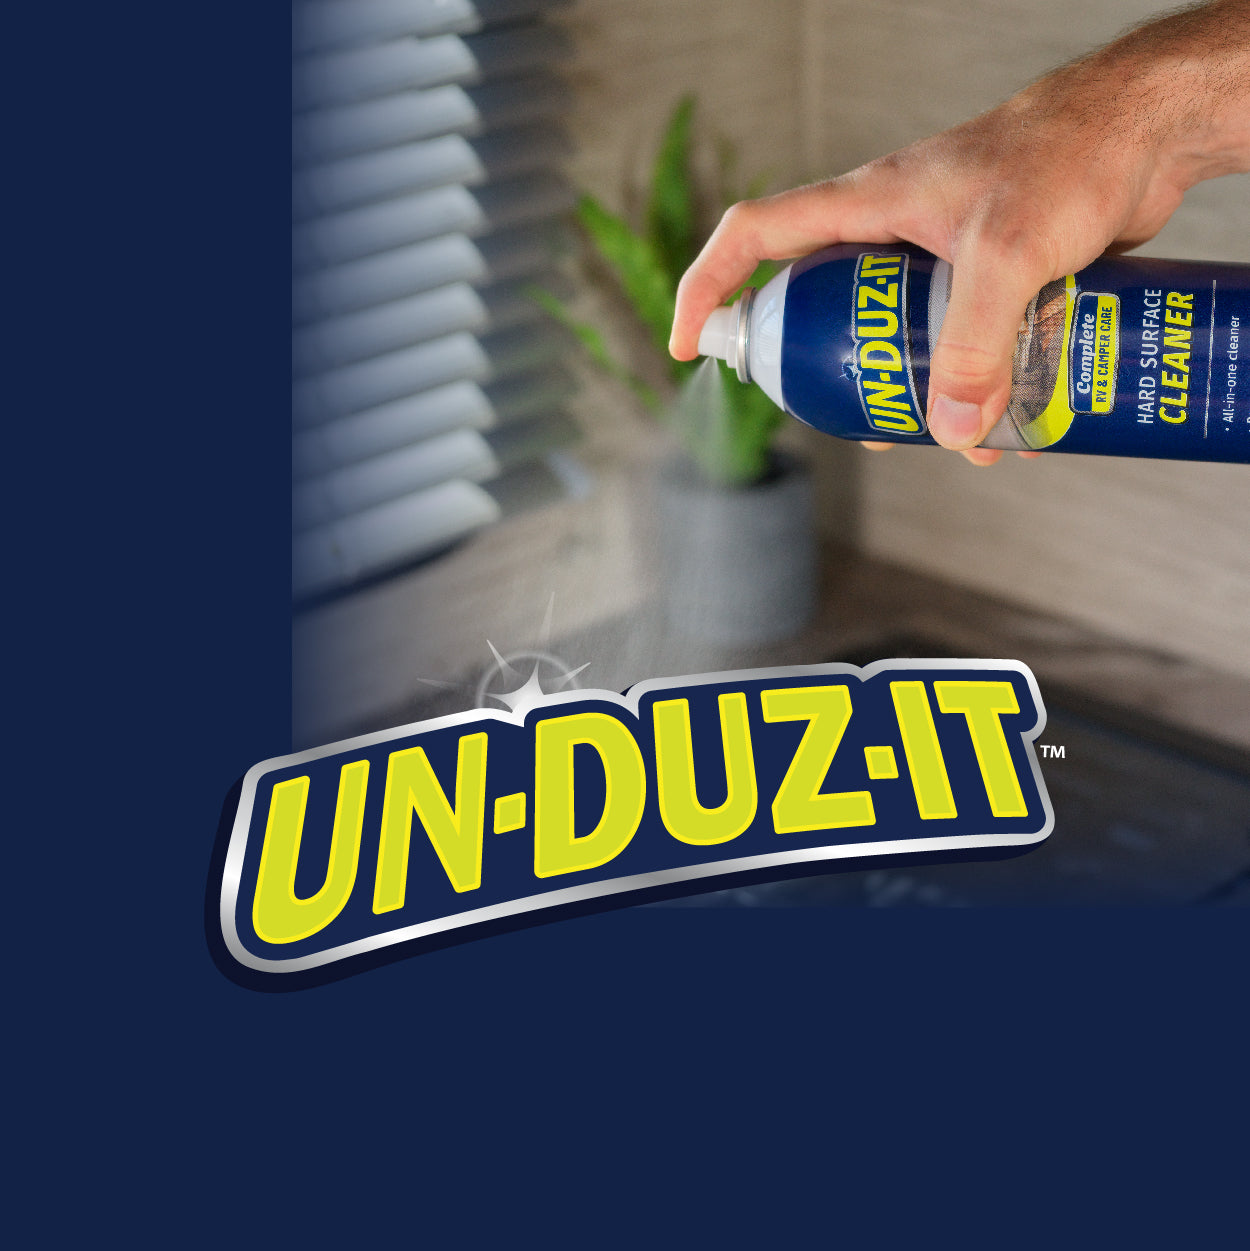 Un-Duz-It Logo & Hard Surface Cleaner in Use